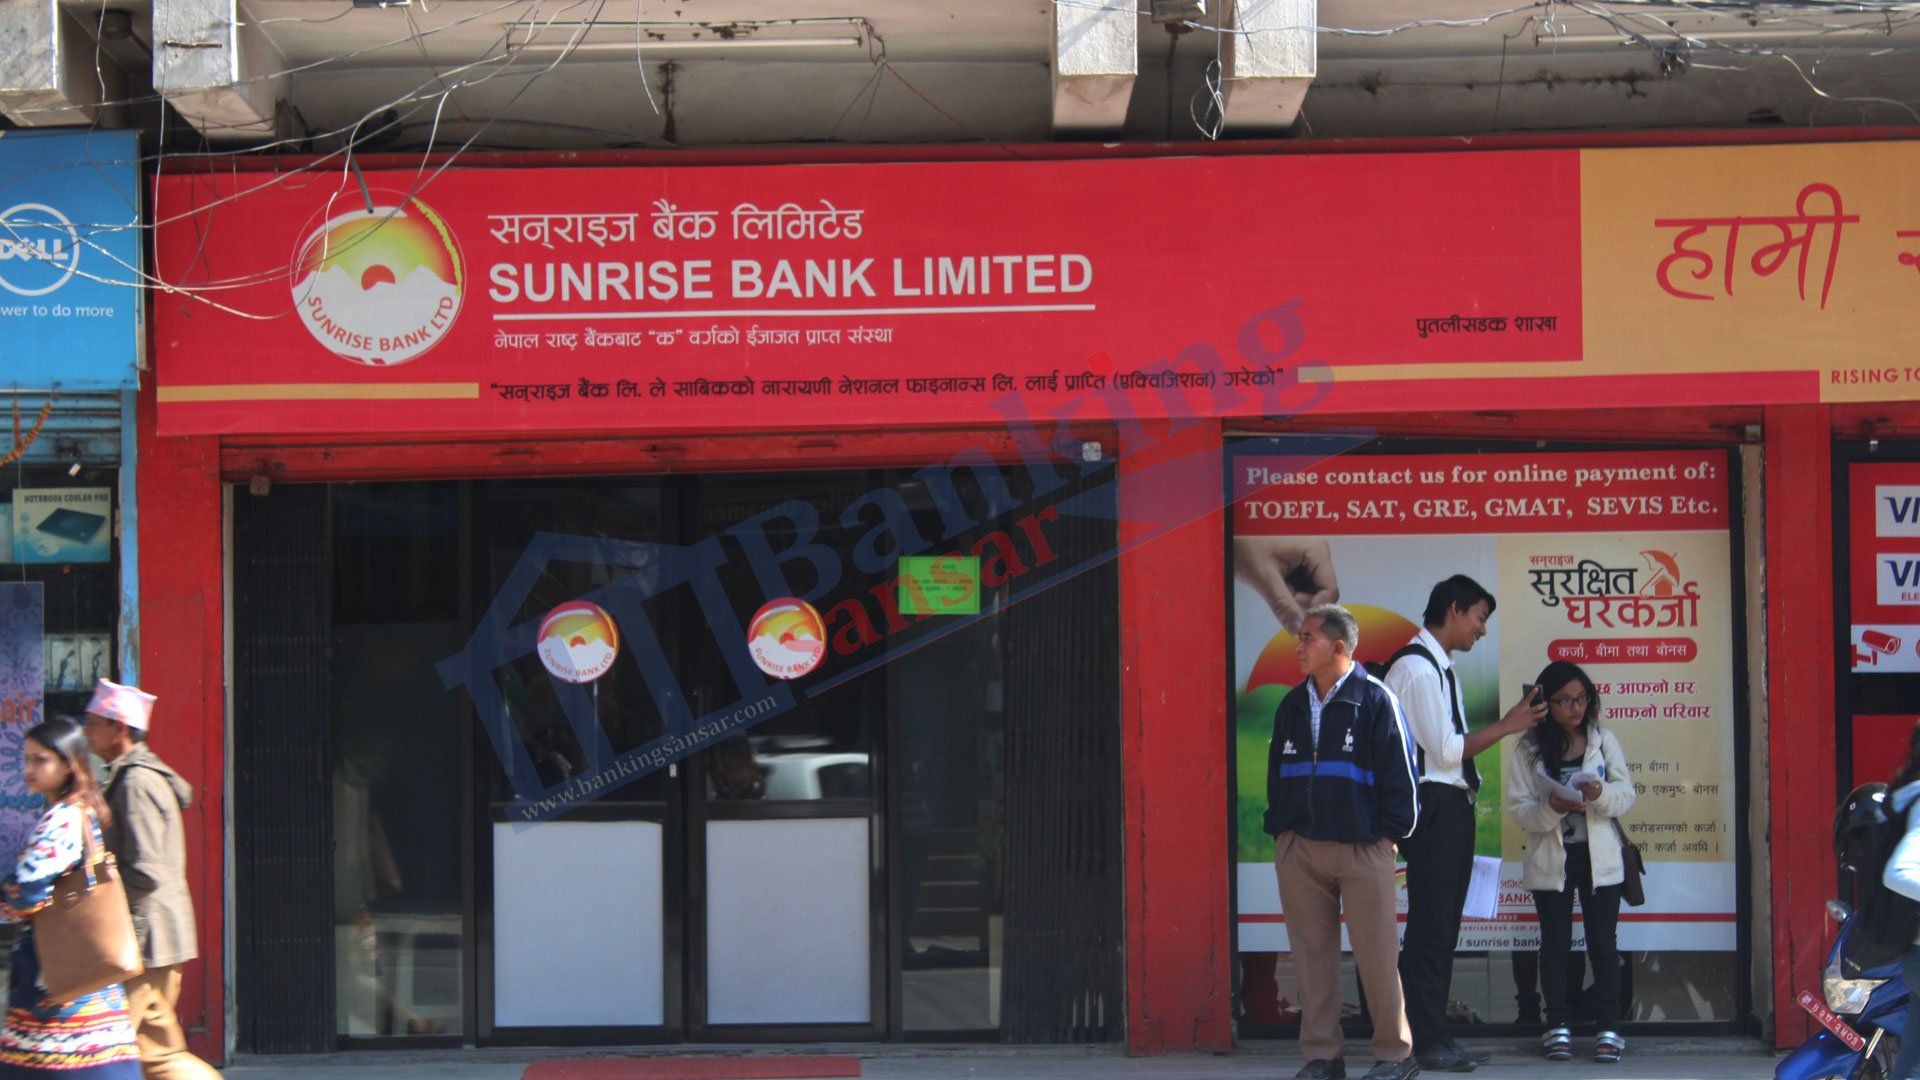 Sunrise Bank